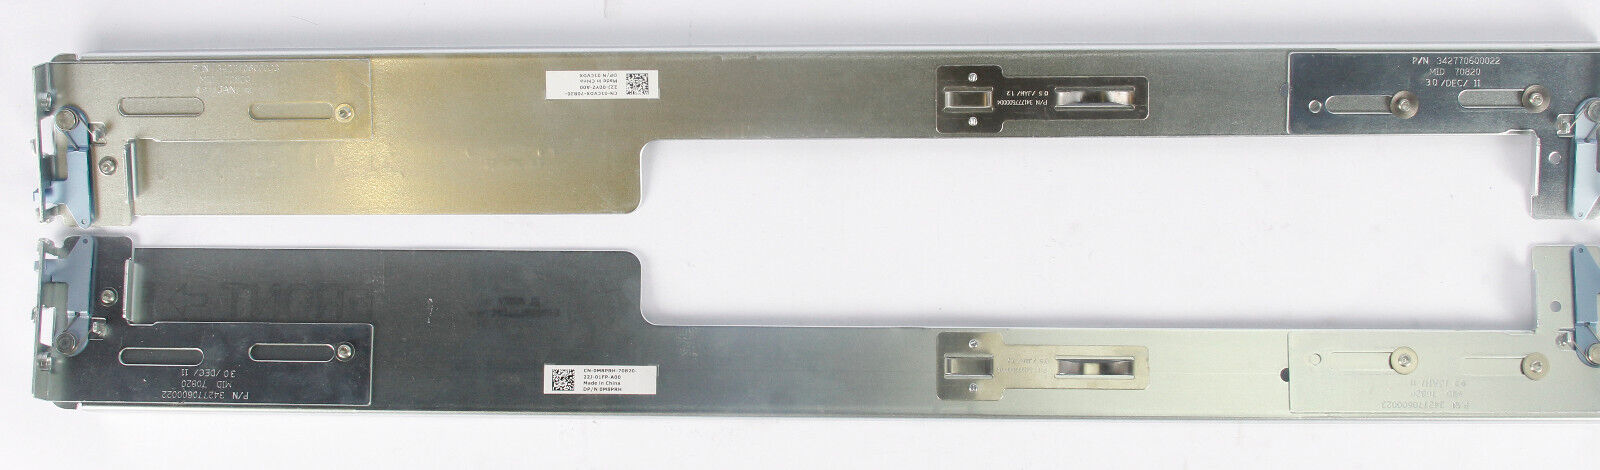 Dell PowerVault MD1220 MD3200i MD3220i 2U Static Rail Kit 01CVDX 0M8PRH